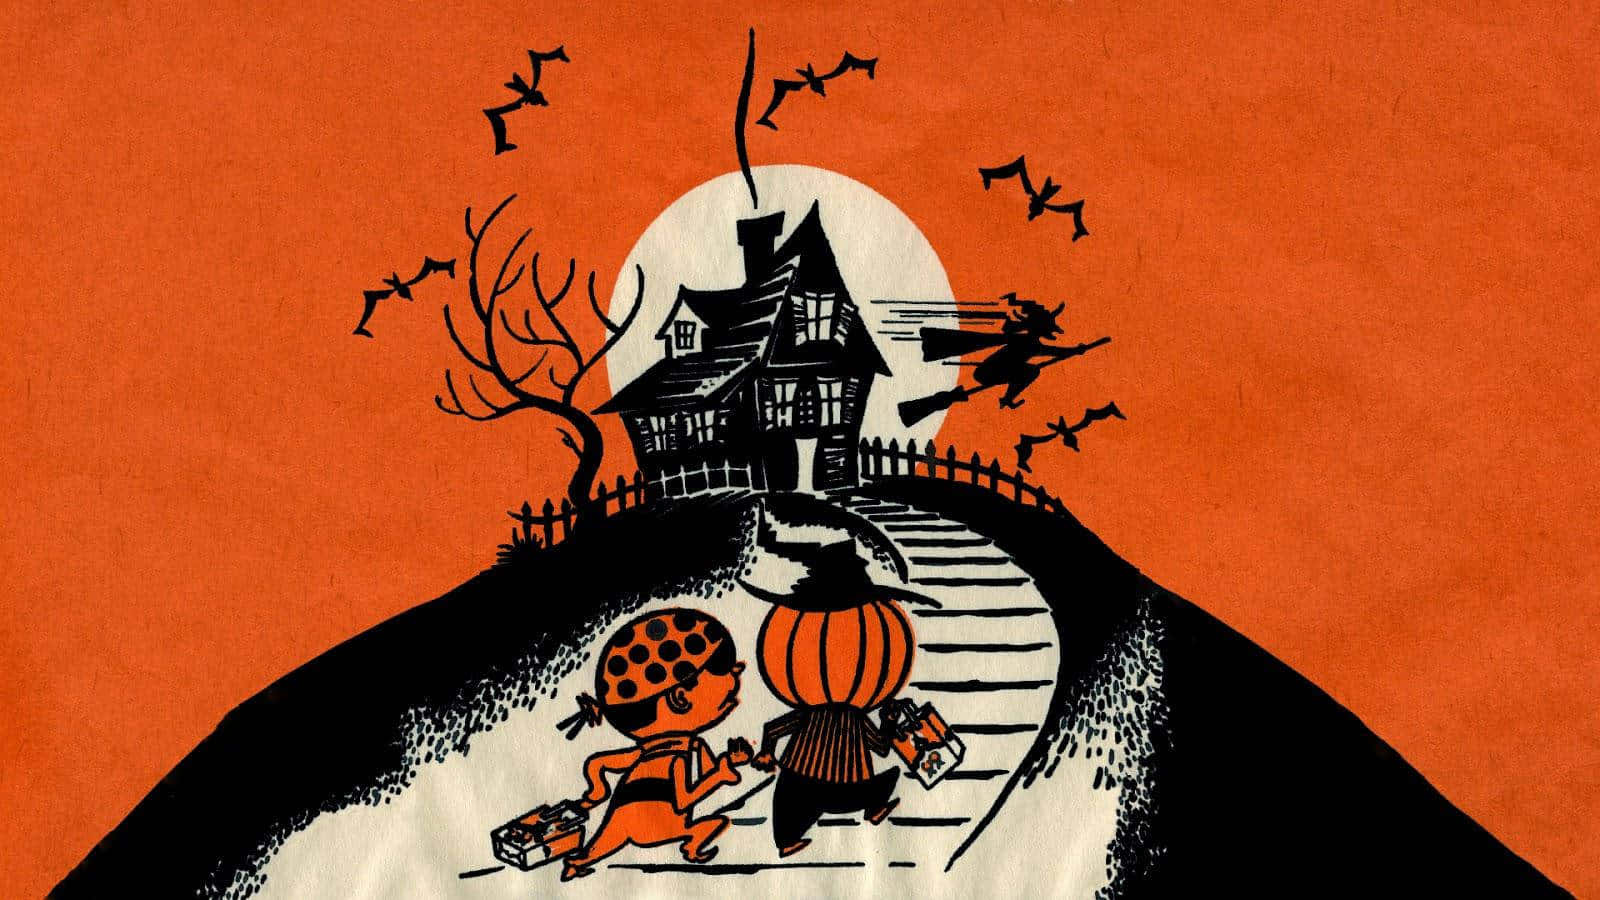 Halloween Children Trickor Treatingat Haunted House Wallpaper